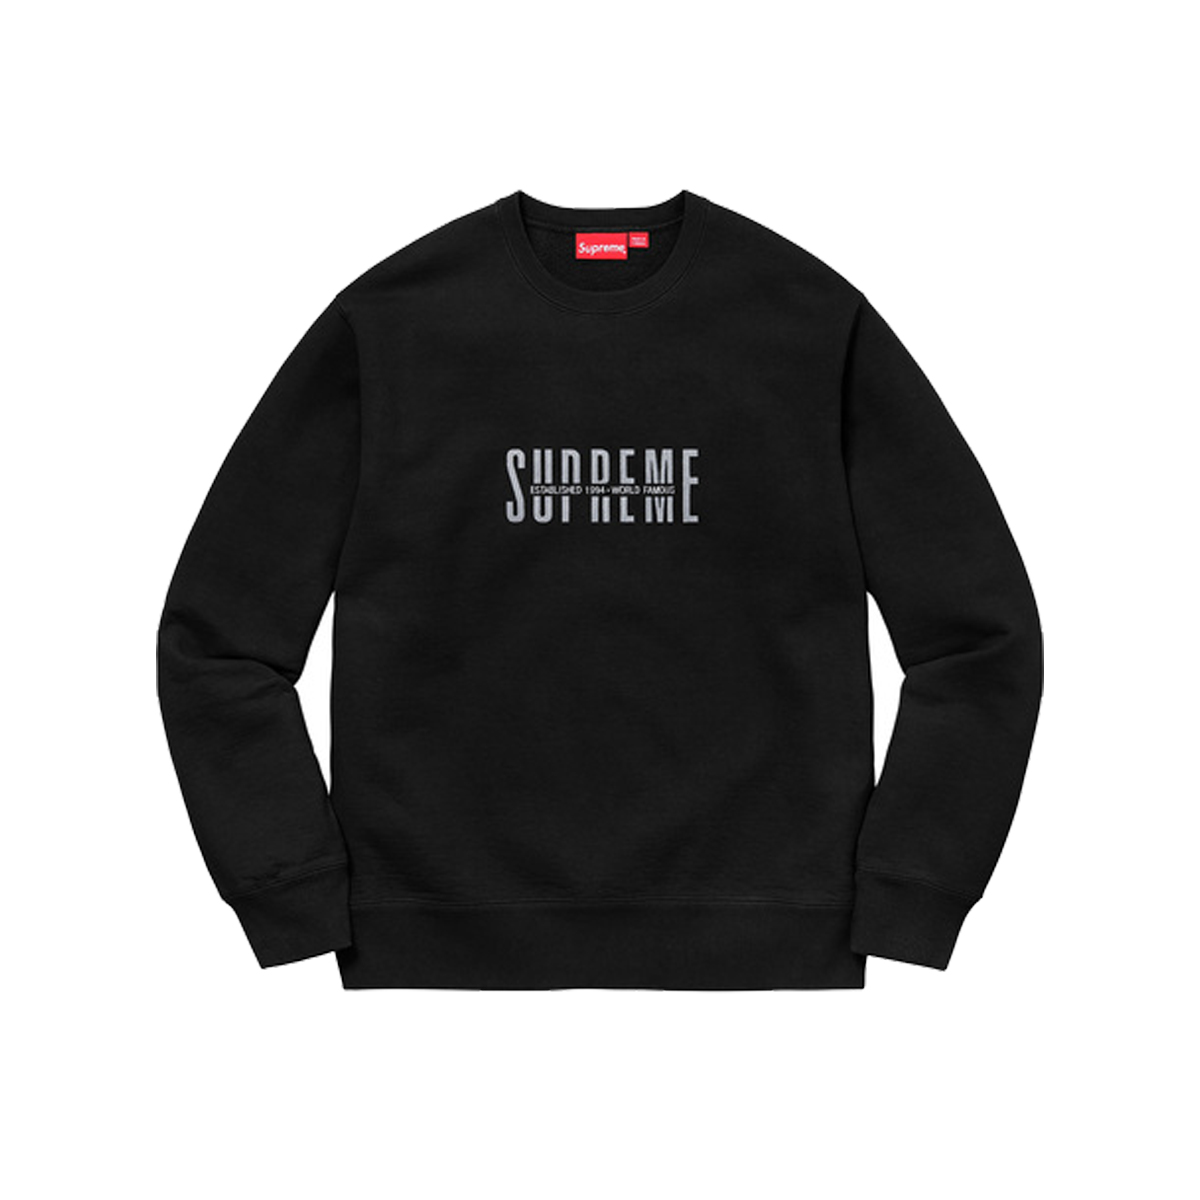 Supreme World Famous Crewneck Sweatshirt